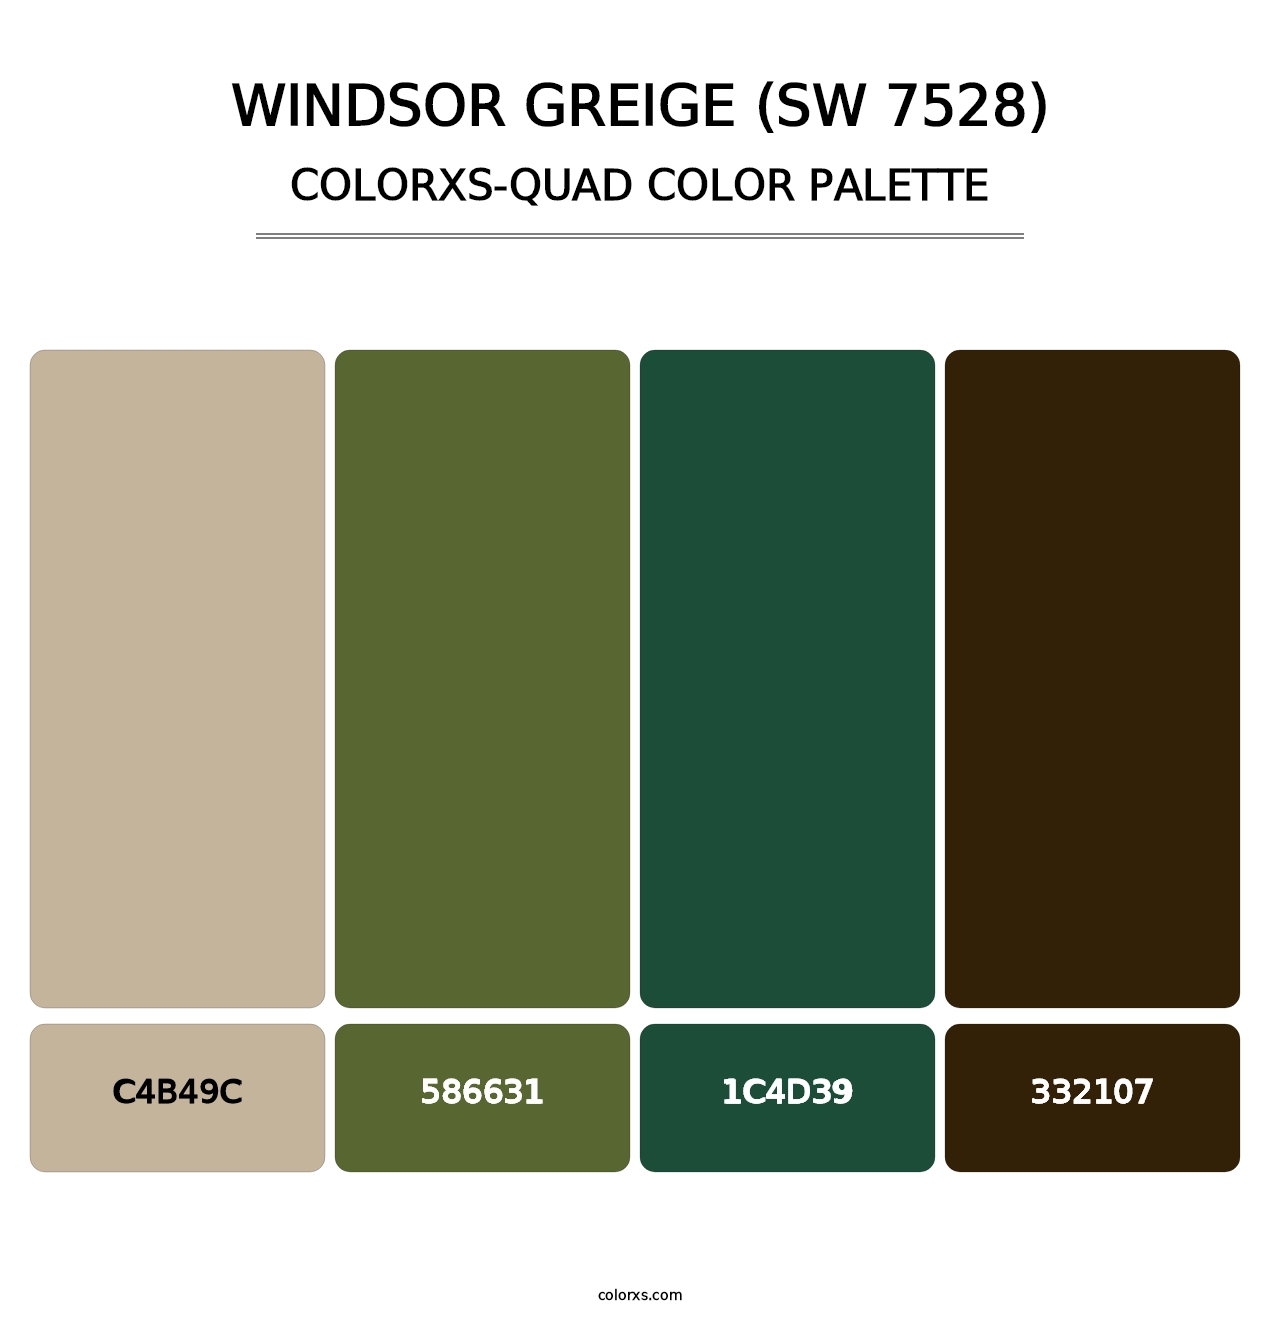 Windsor Greige (SW 7528) - Colorxs Quad Palette